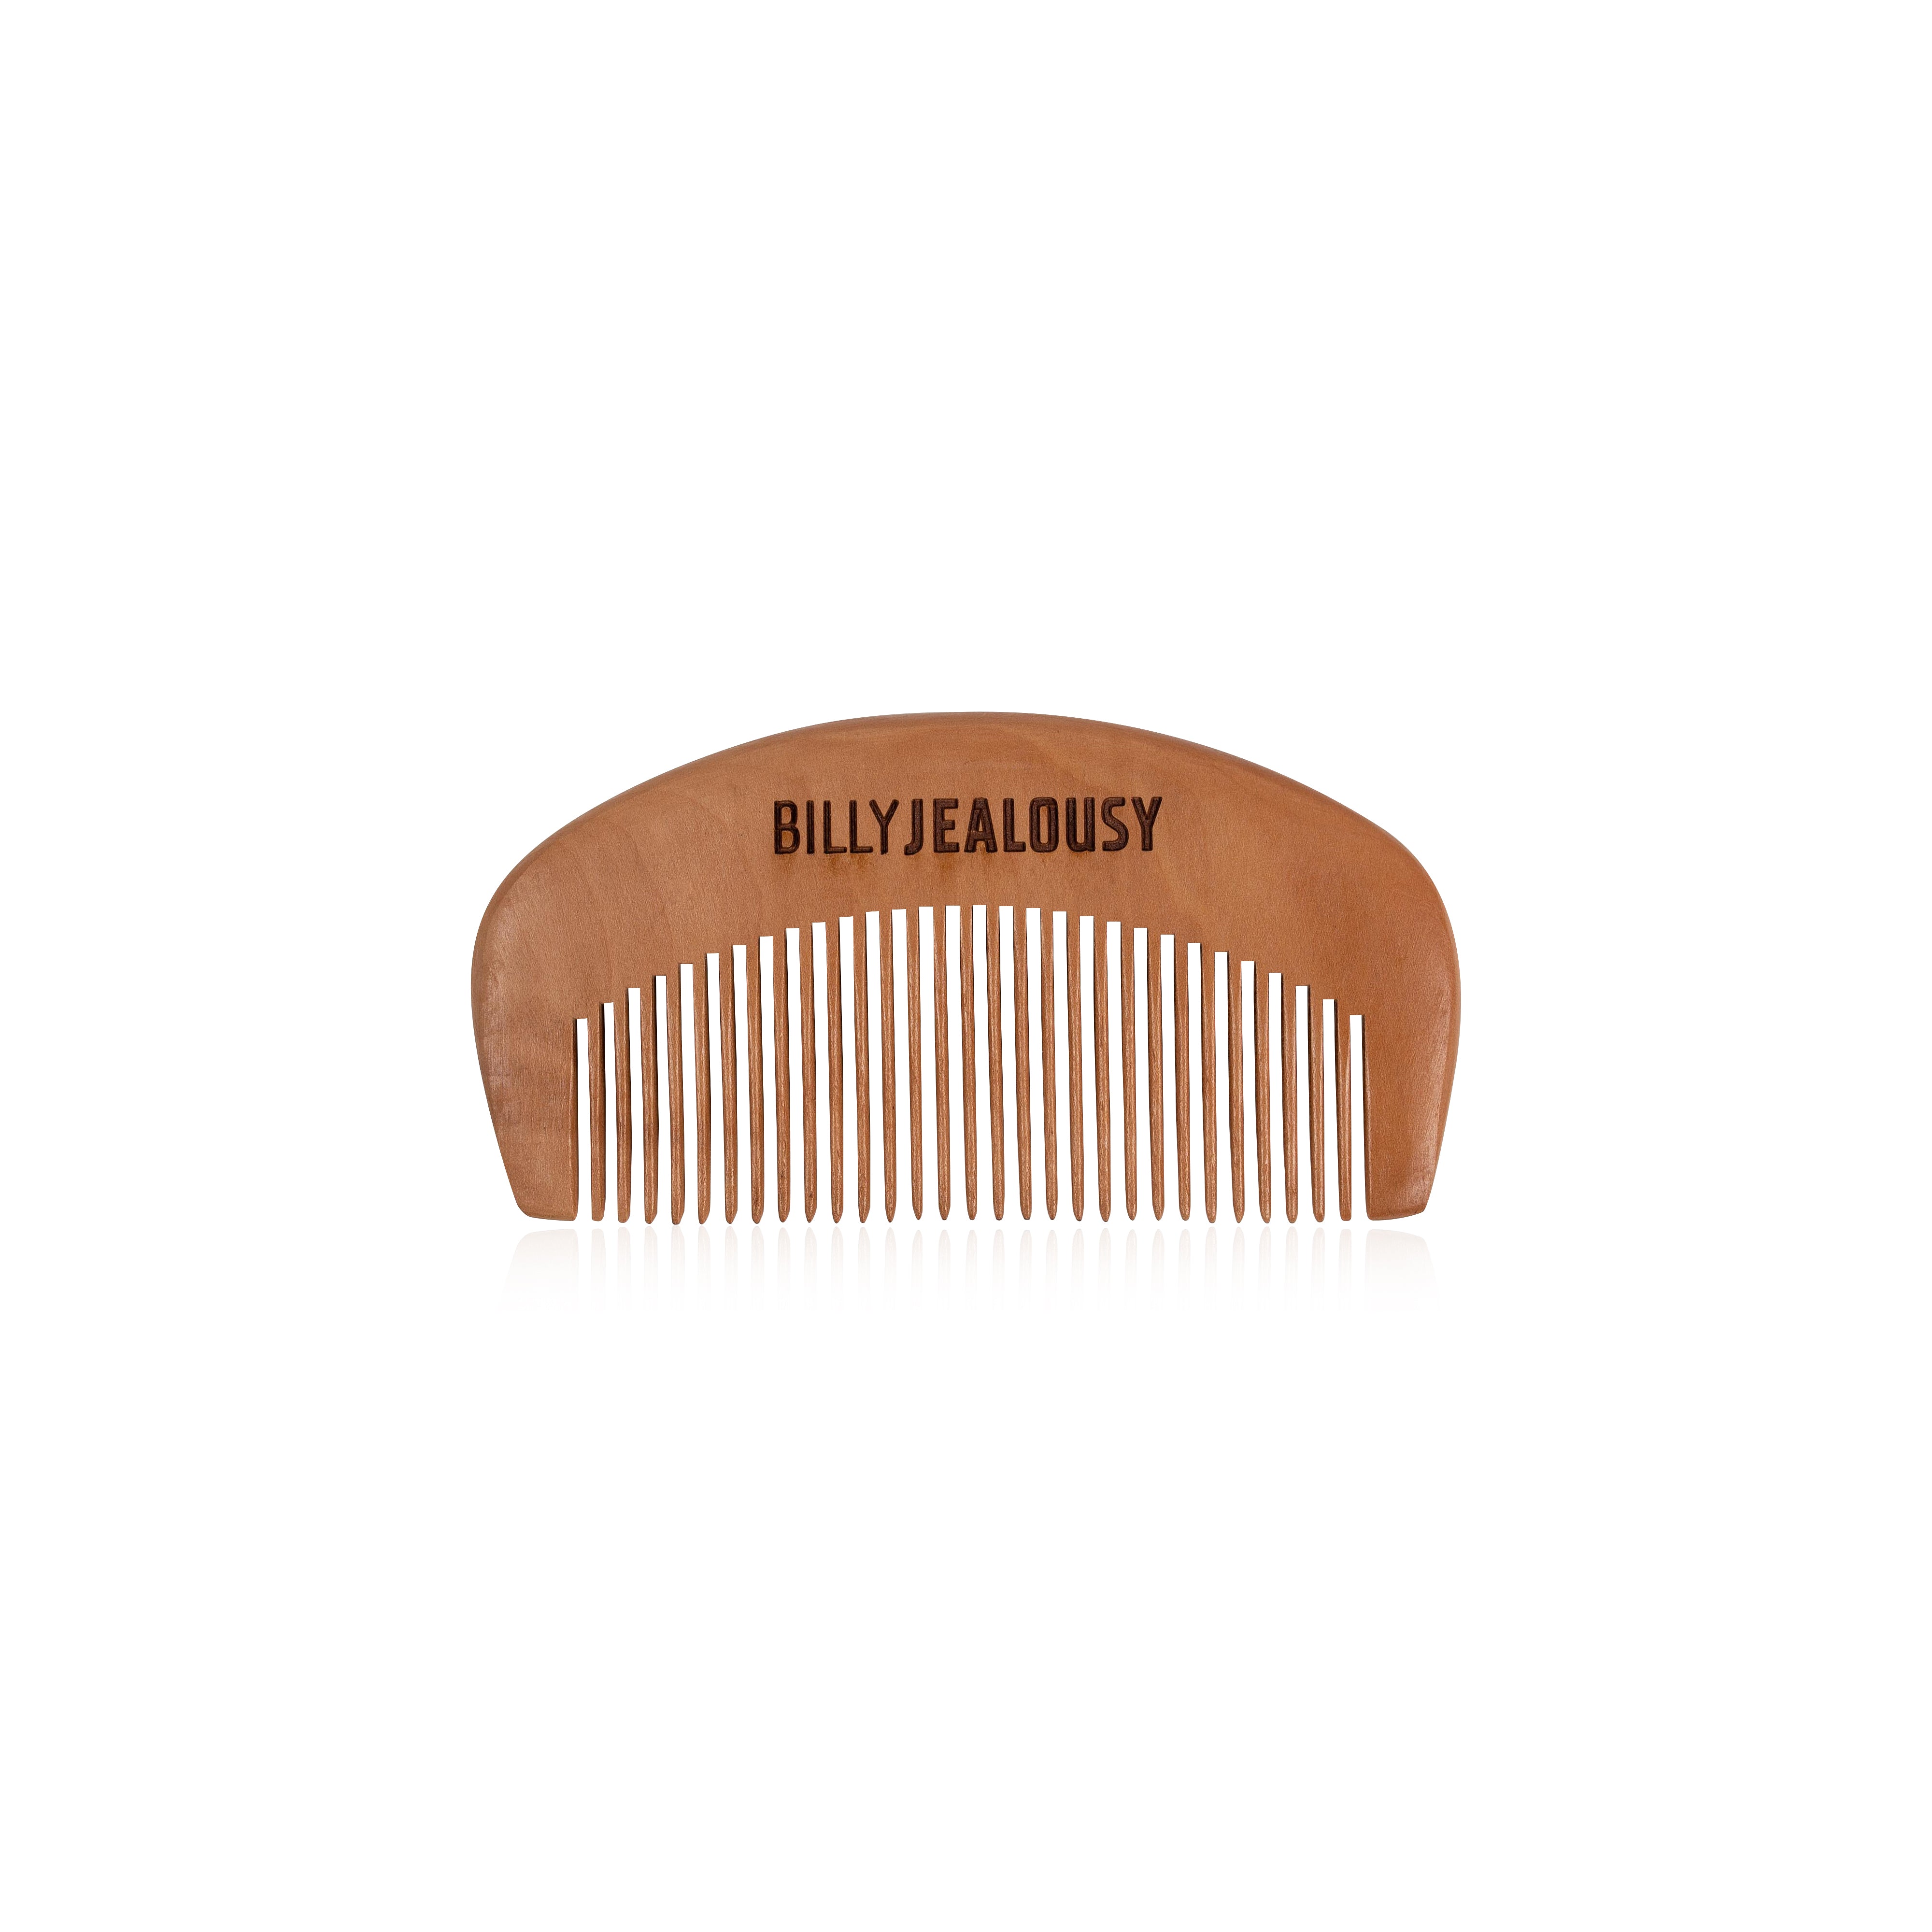 Beard Comb, Wooden Beard Comb